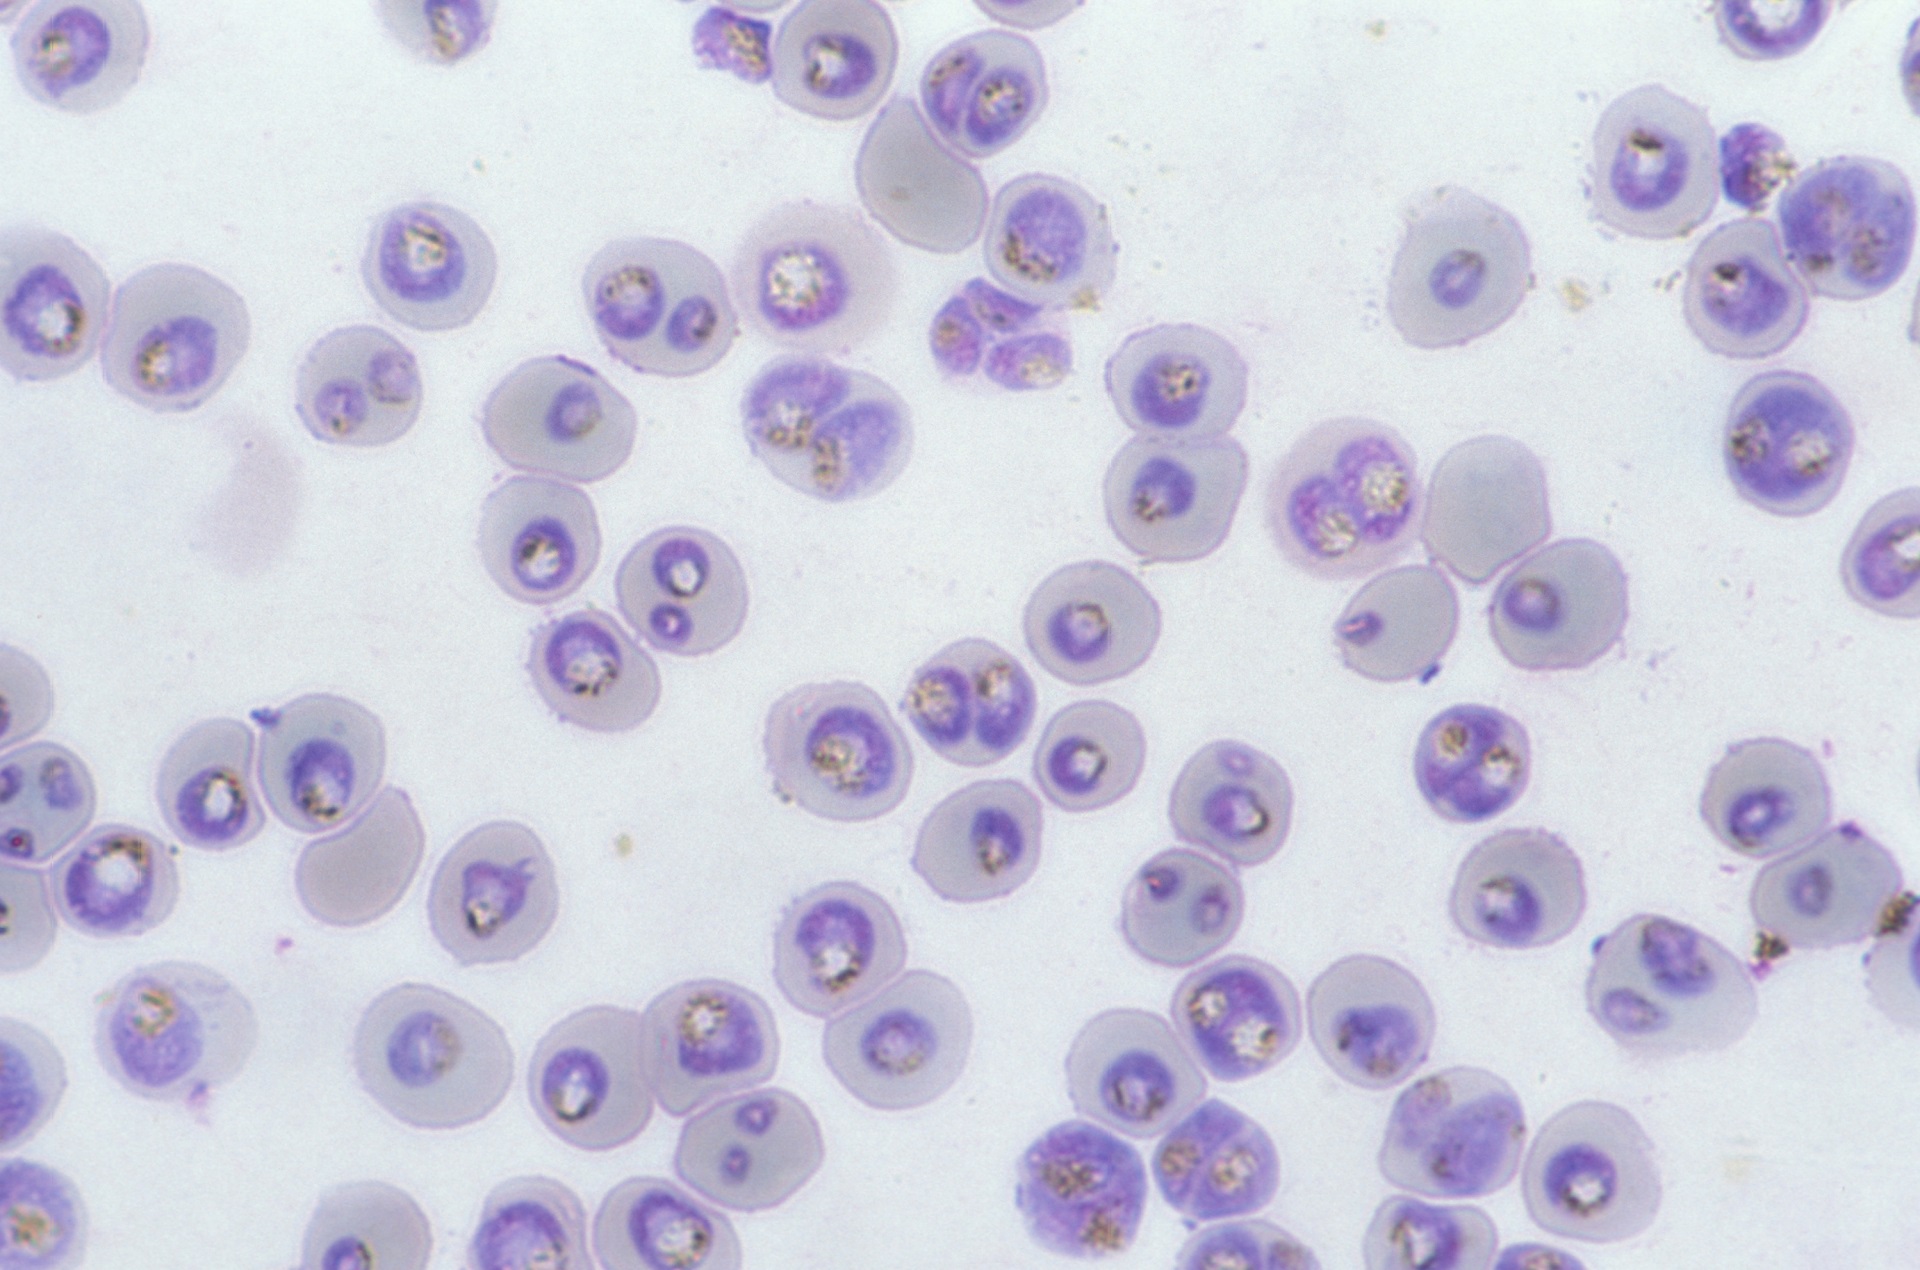 malária plazmodium